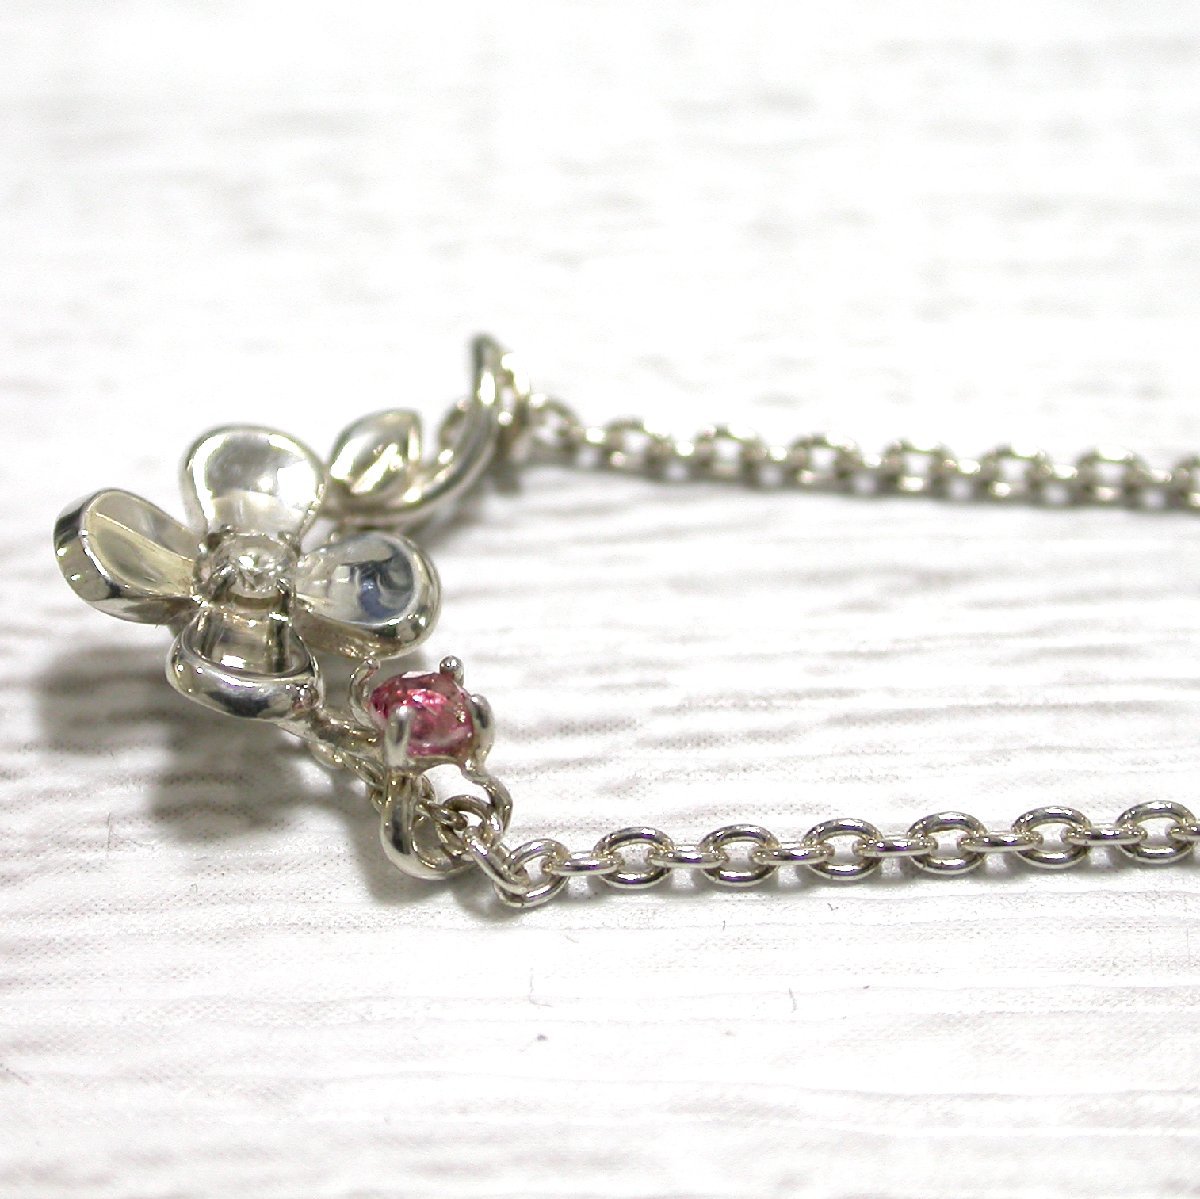 M1180[BSJBJ]STAR JEWELRY Star Jewelry Sv925 SILVER silver Cubic Zirconia crystal flower pendant necklace 